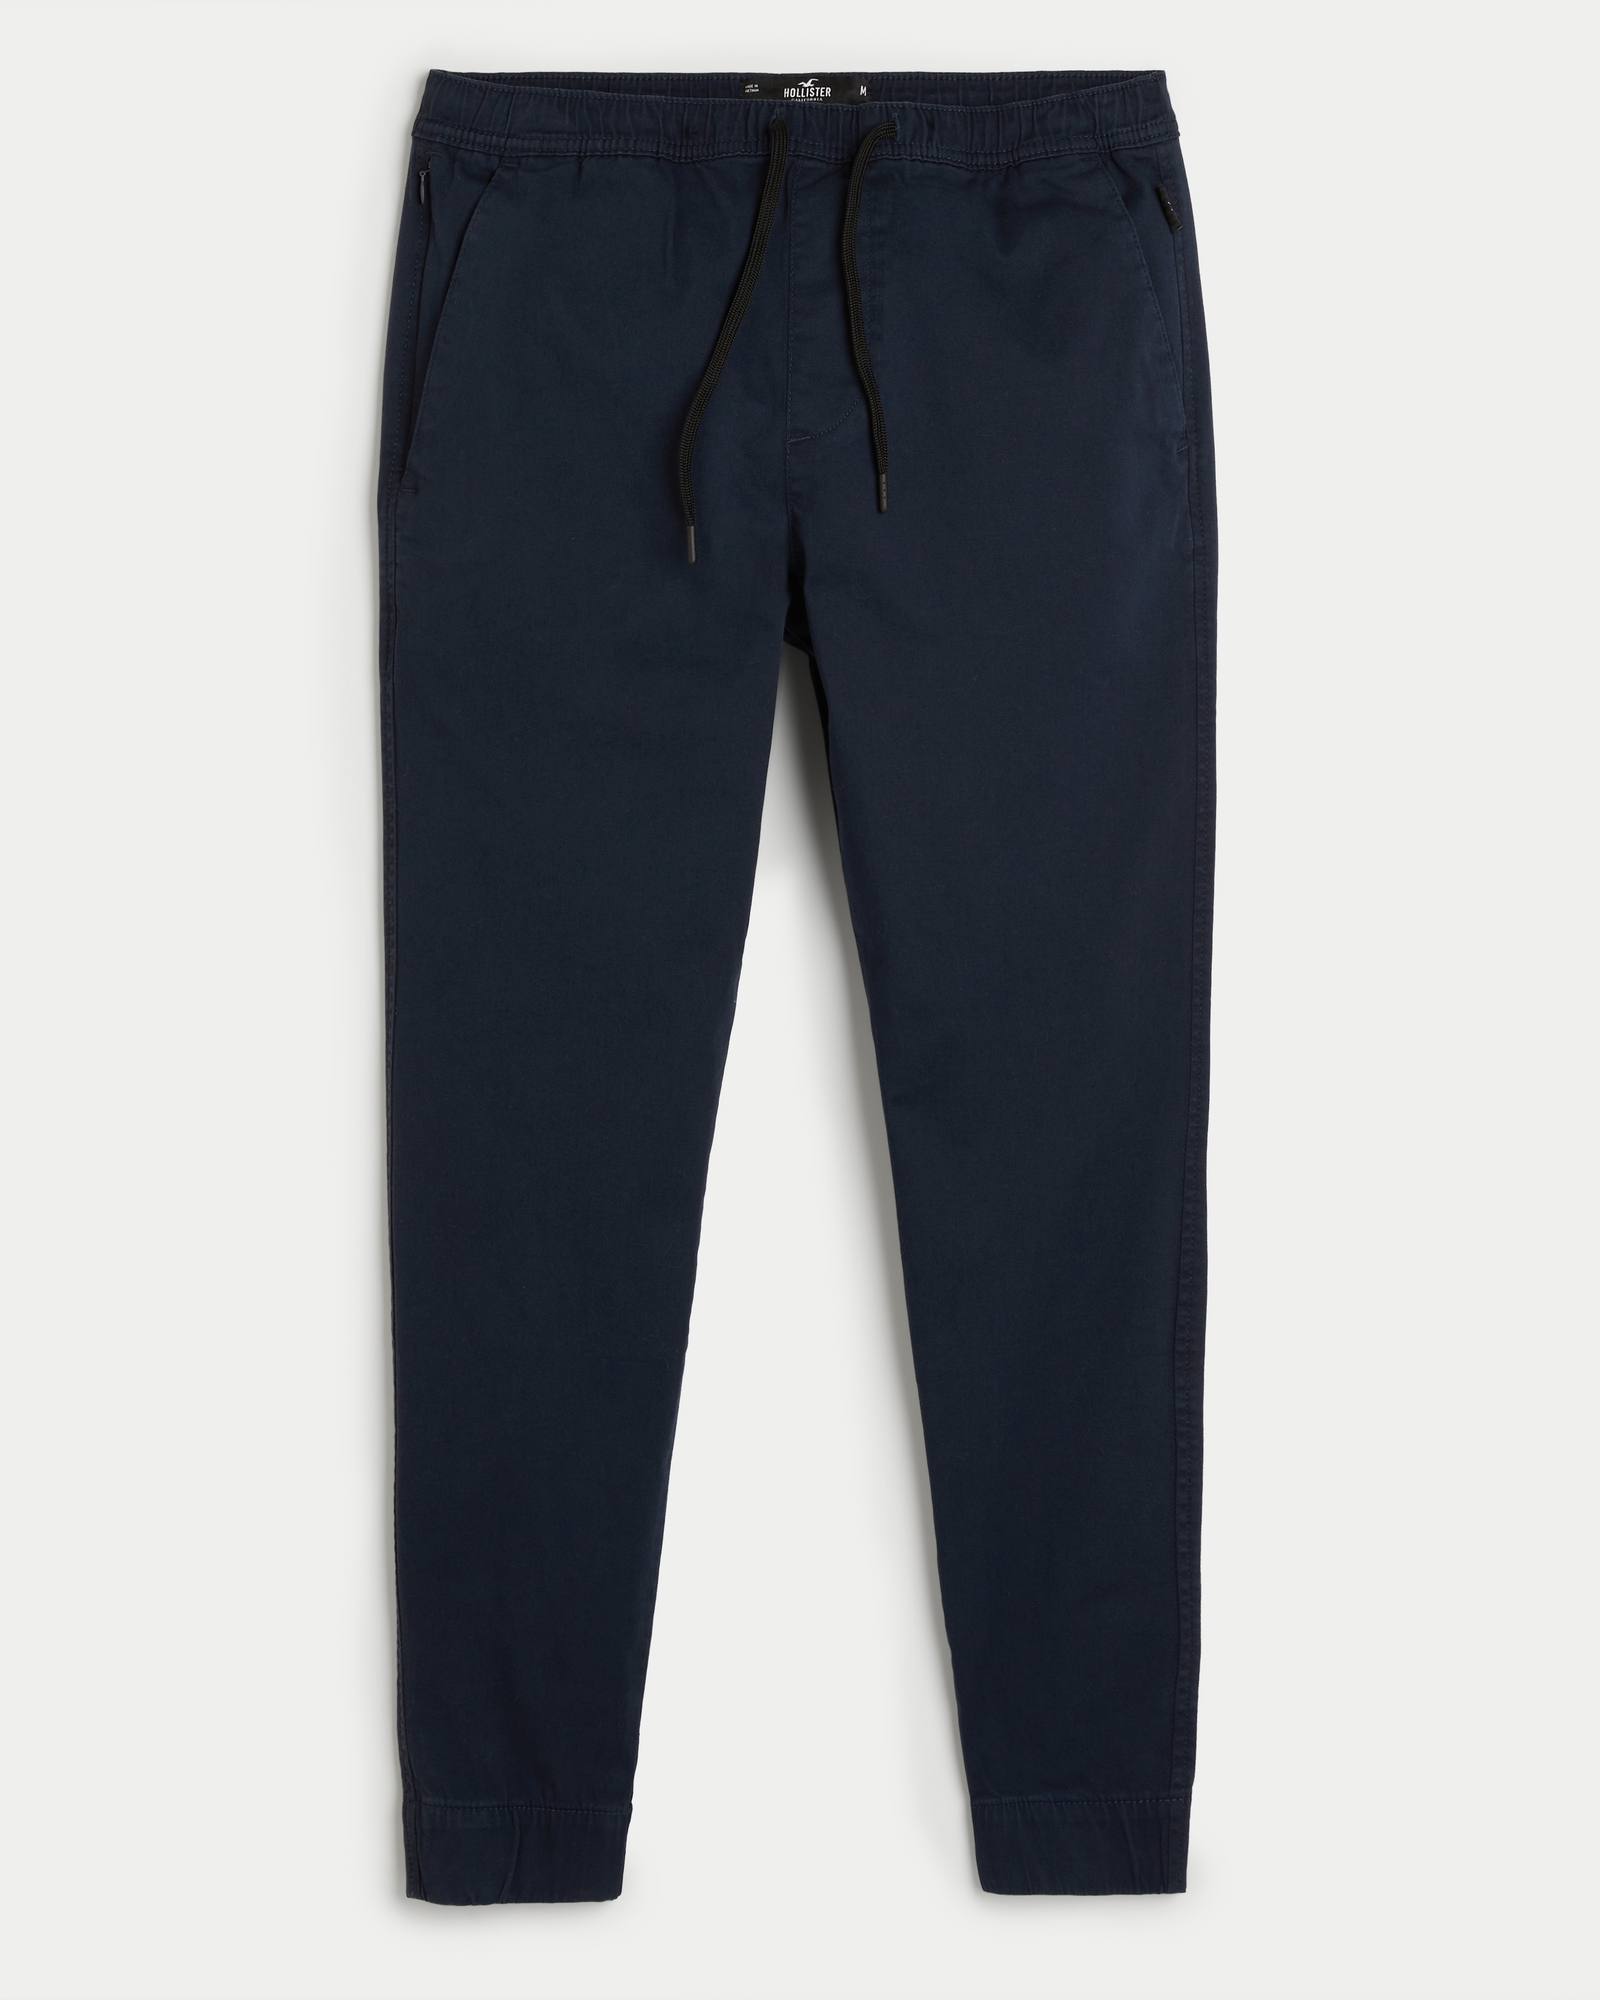 Hollister Sweatpants Size Medium Gray Blue Joggers Drawstring